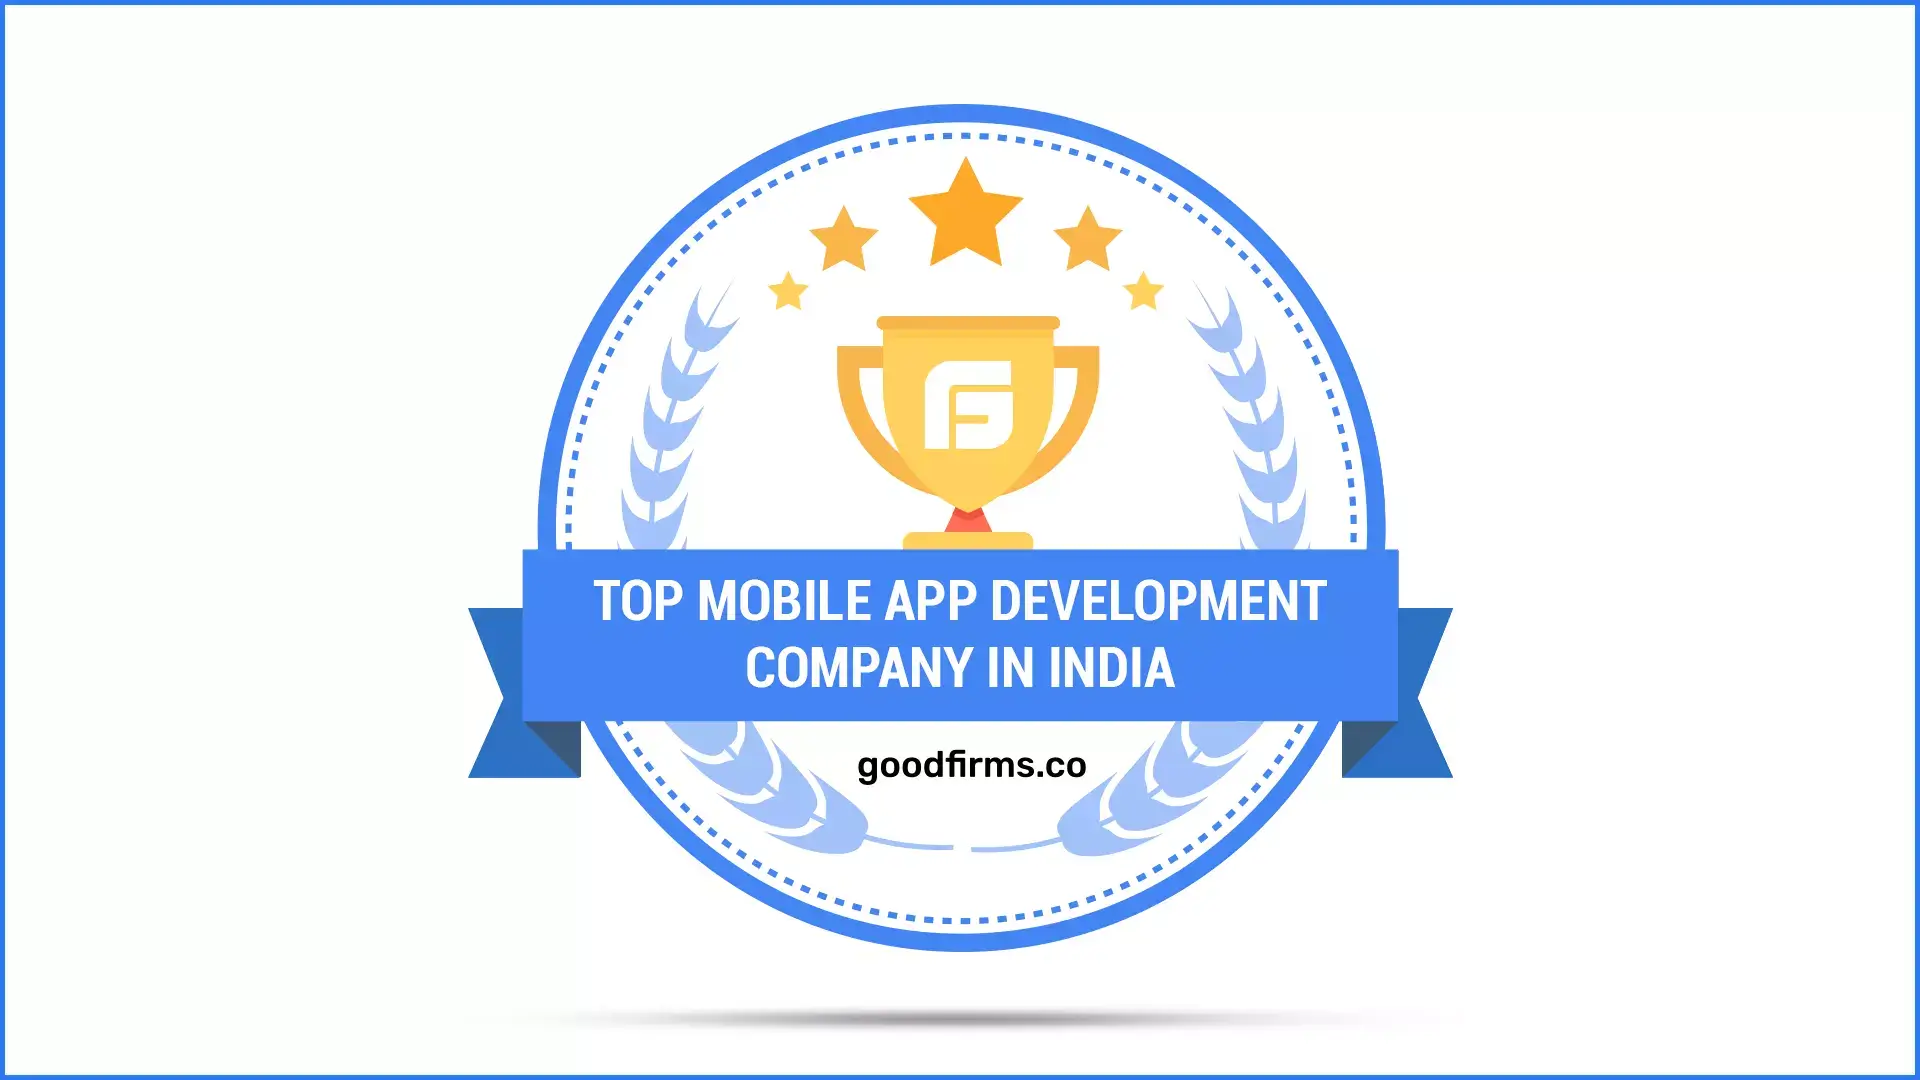 Top Mobile App Development Company In India